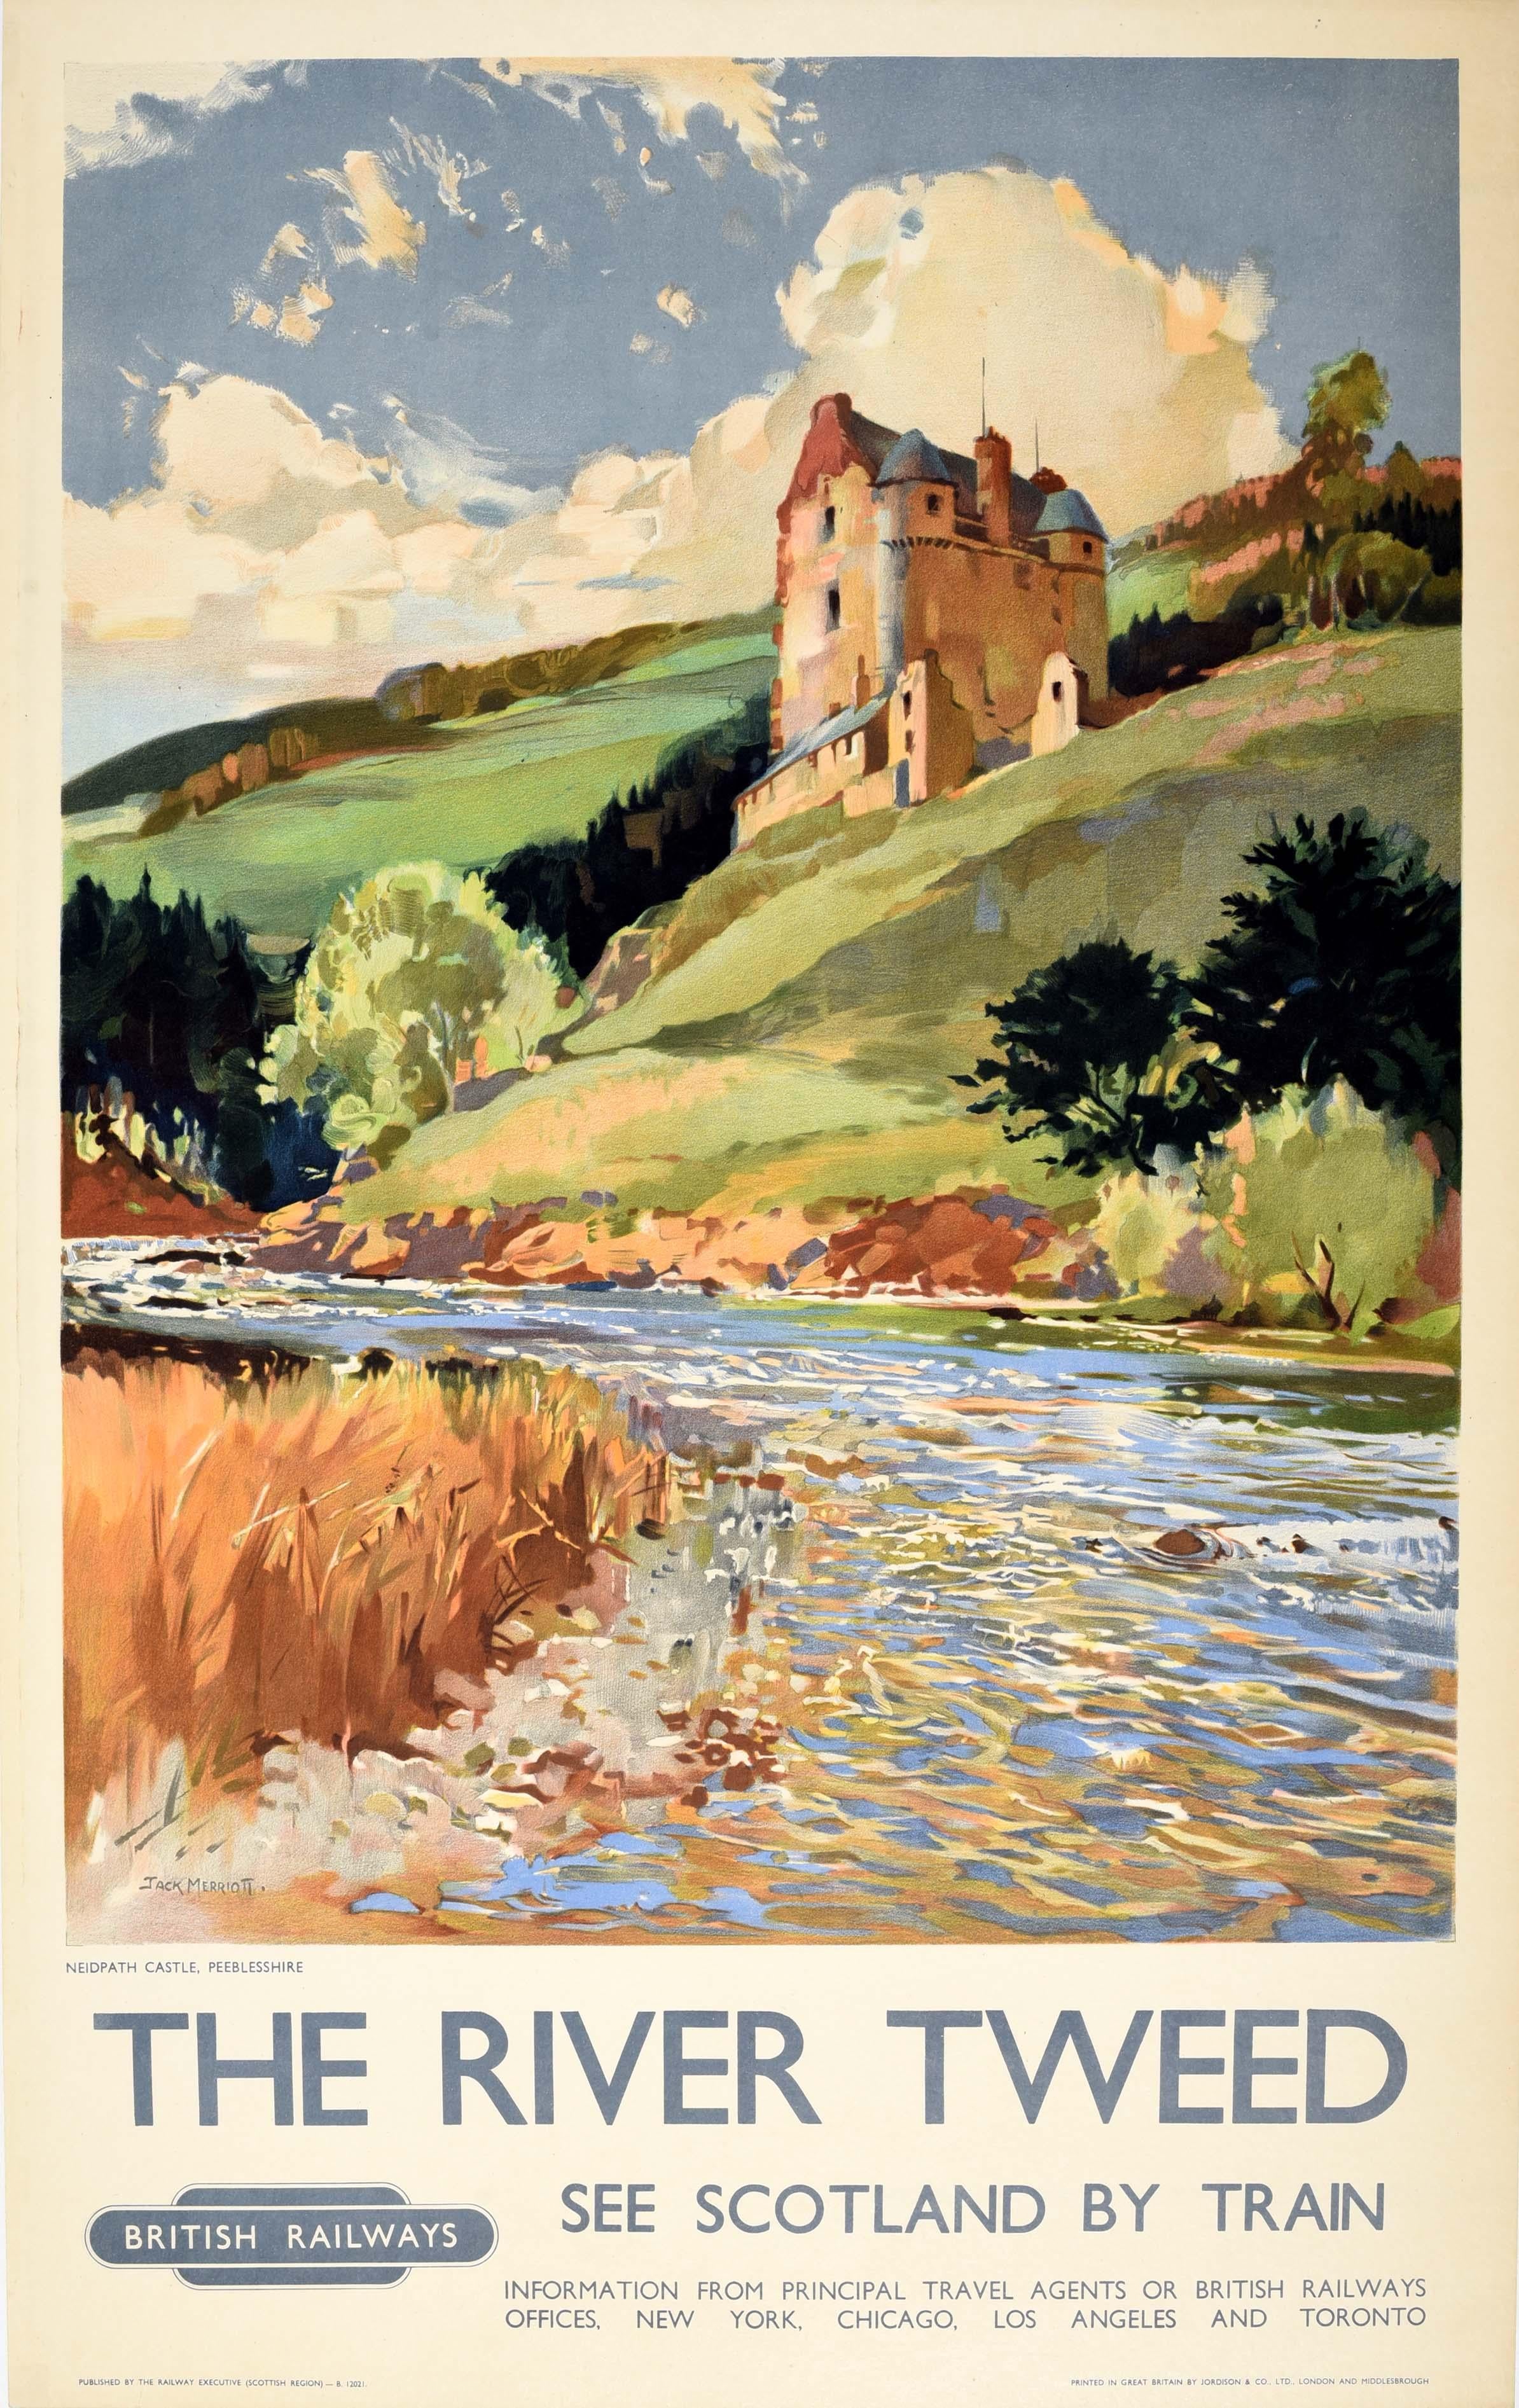 Jack Merriott Print - Original Vintage Travel Poster The River Tweed Scotland British Railways Design